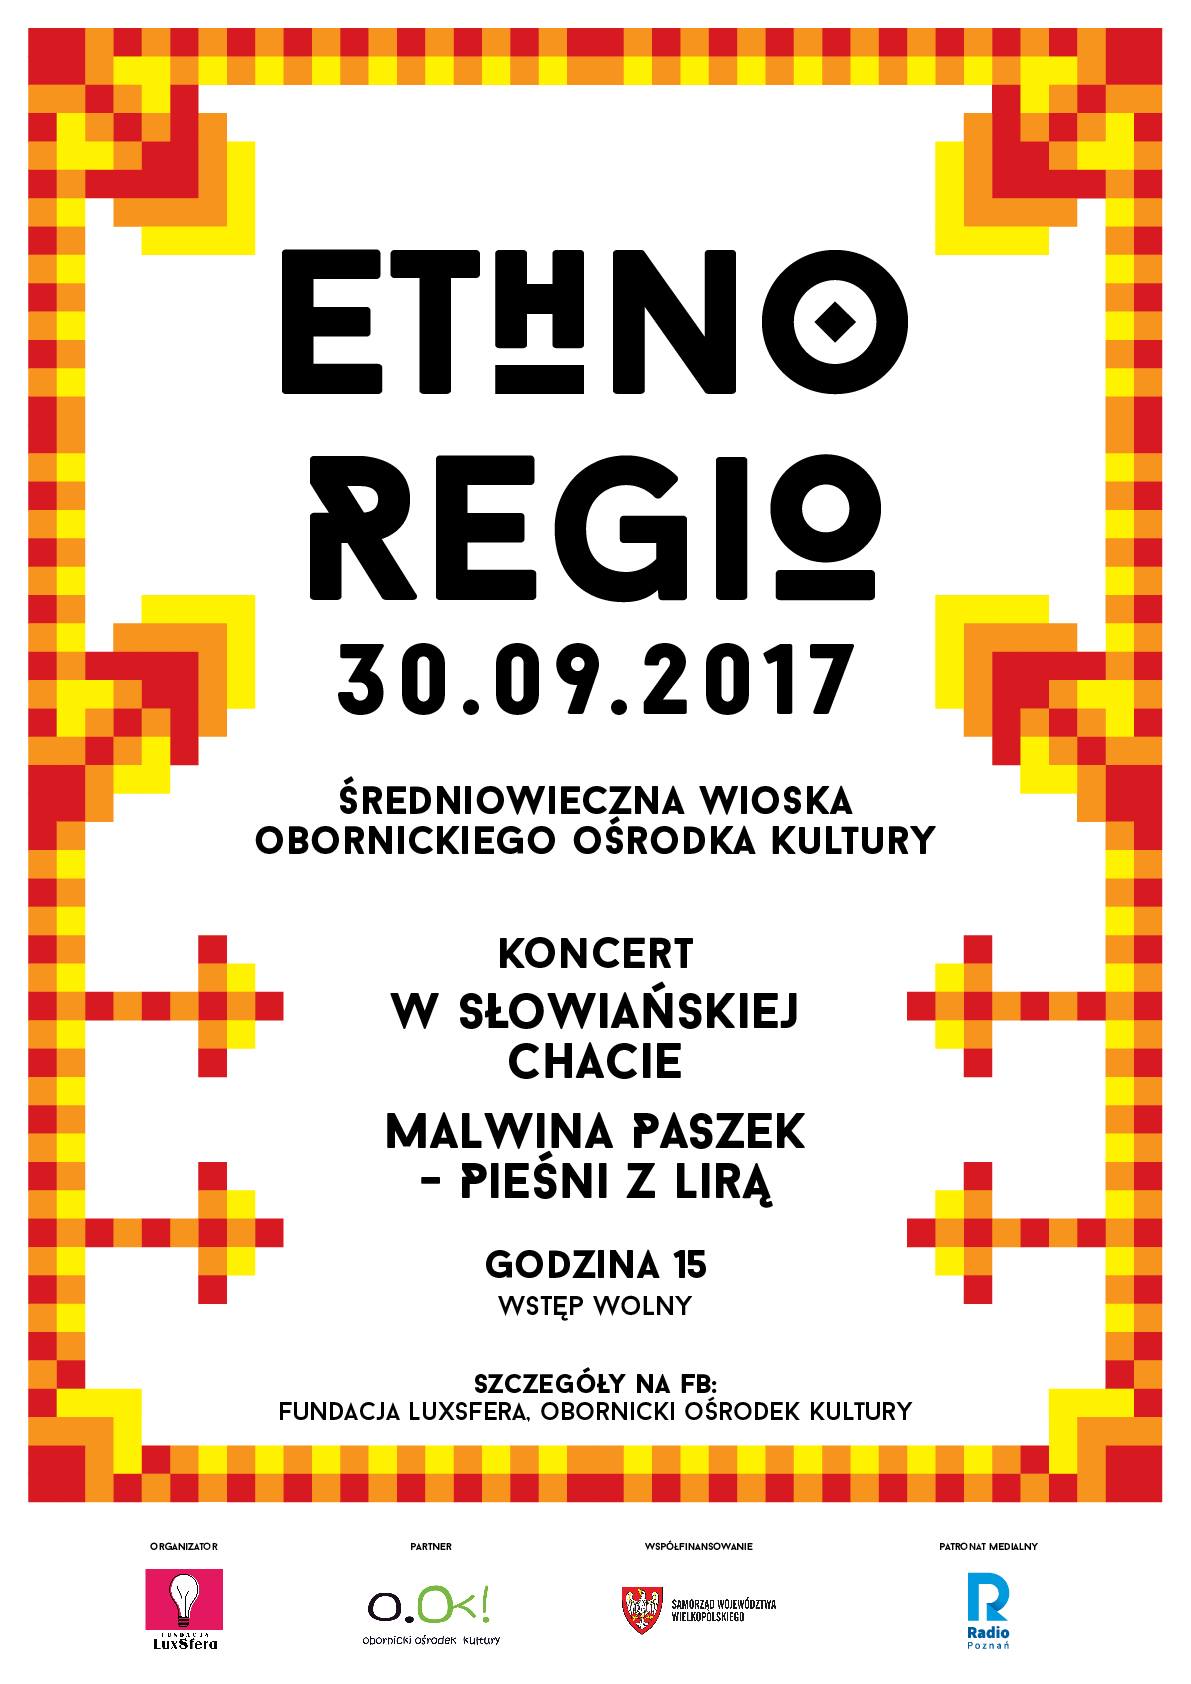 Ethno Regio 2017 Oborniki Wielkopolskie